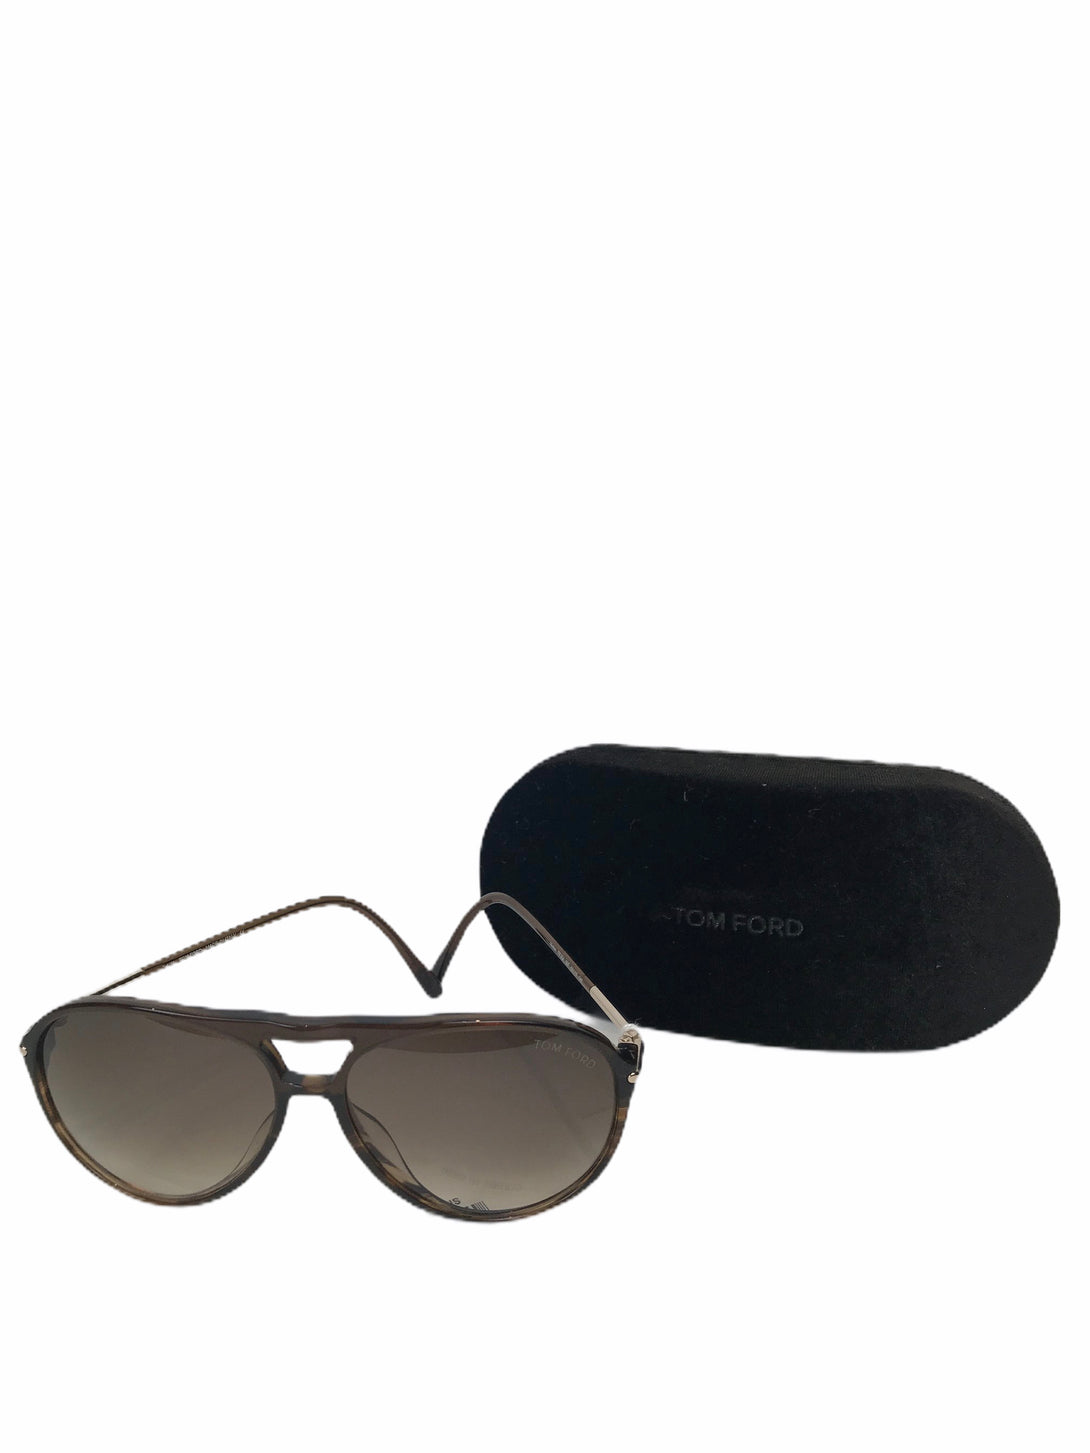 Tom Ford Sunglasses - As Seen on Instagram 29/07/20 - Siopaella Designer Exchange